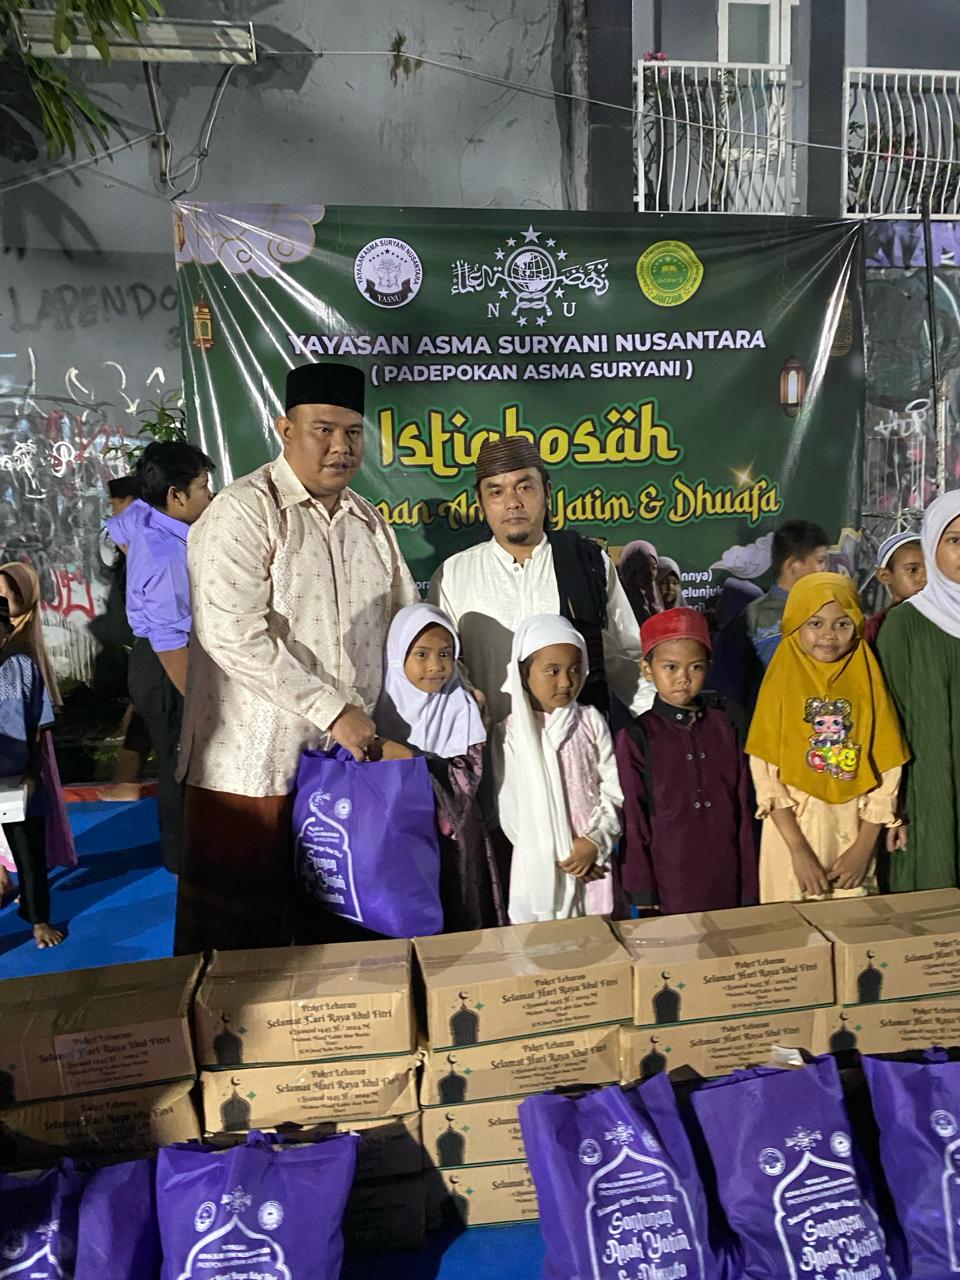 Padepokan Asma Suryani Nusantara Menyelenggarakan Acara “Istighosah serta Santunan Anak Yatim & dhuafa”